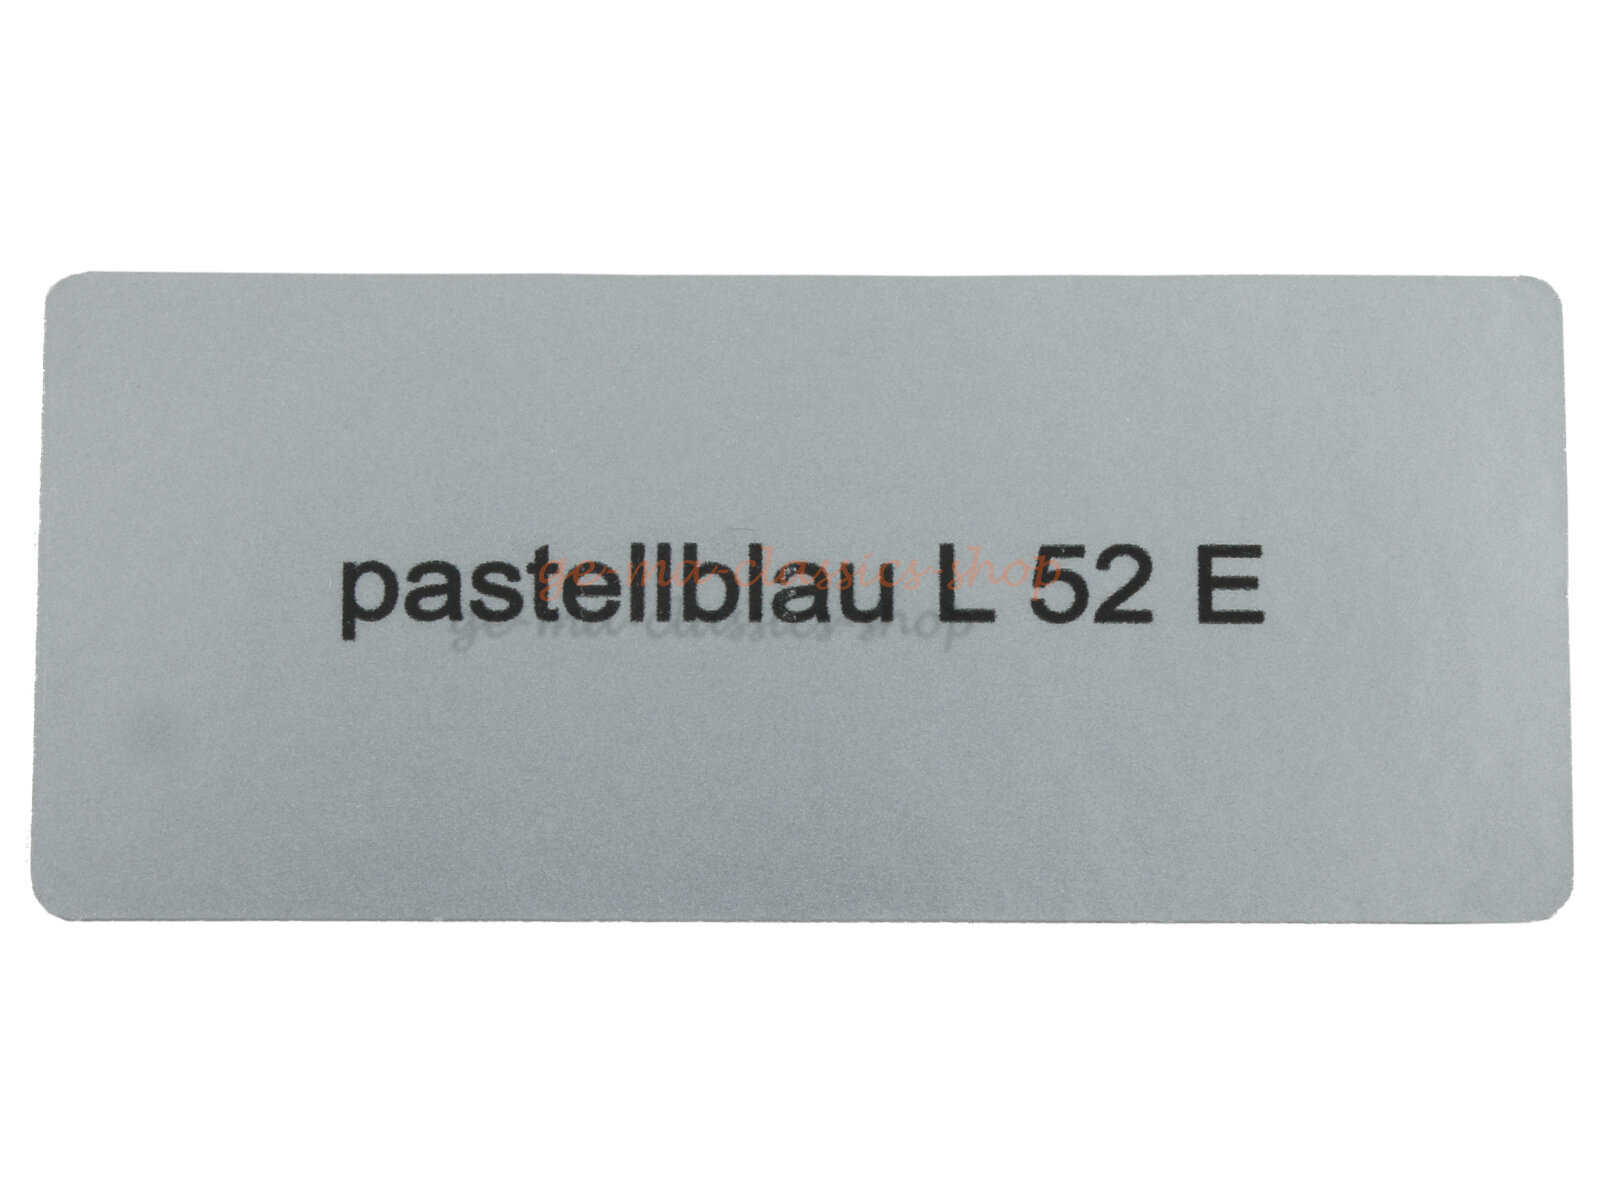 Aufkleber "pastellblau L 52 E" Farbcode Sticker